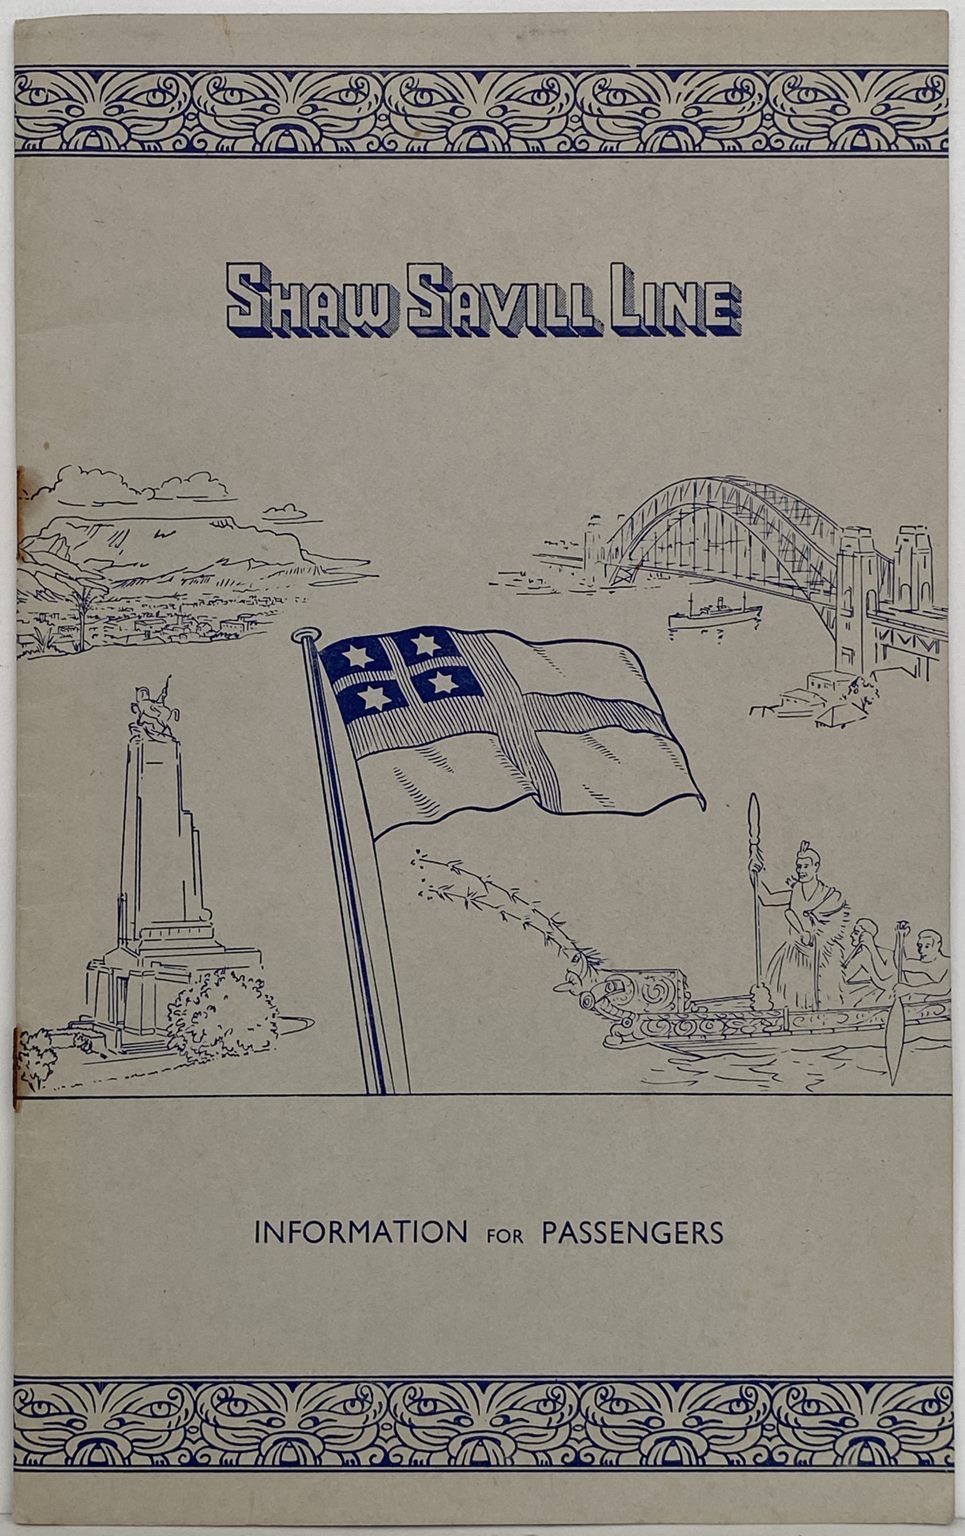 MARITIME MEMORABILIA: Shaw Savill line - Information for Passengers 1940s